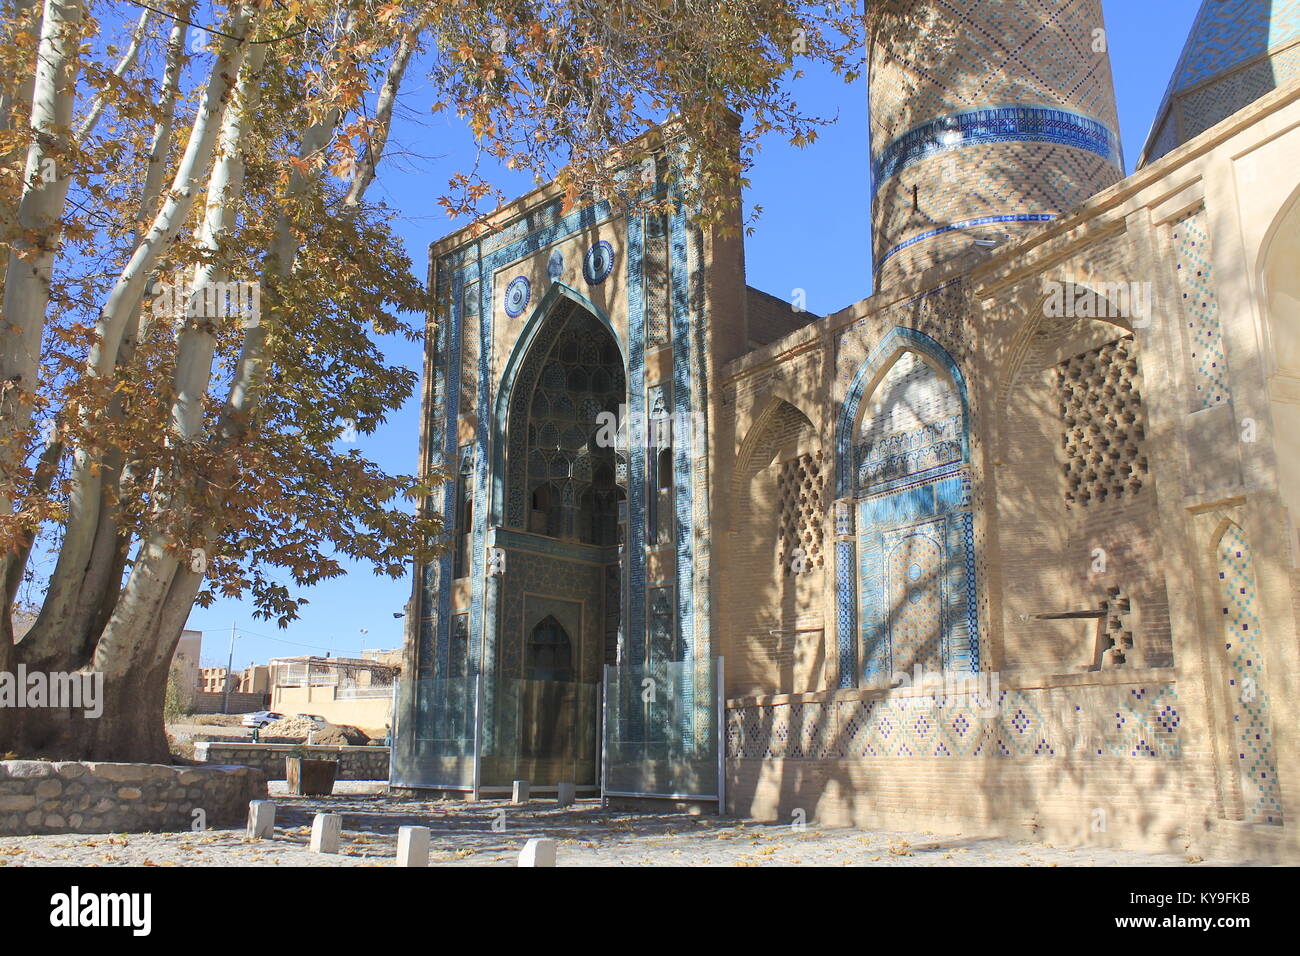 James mosque of Nataz, Isfahan, Iran, image taken in Atumn 2017 Stock Photo